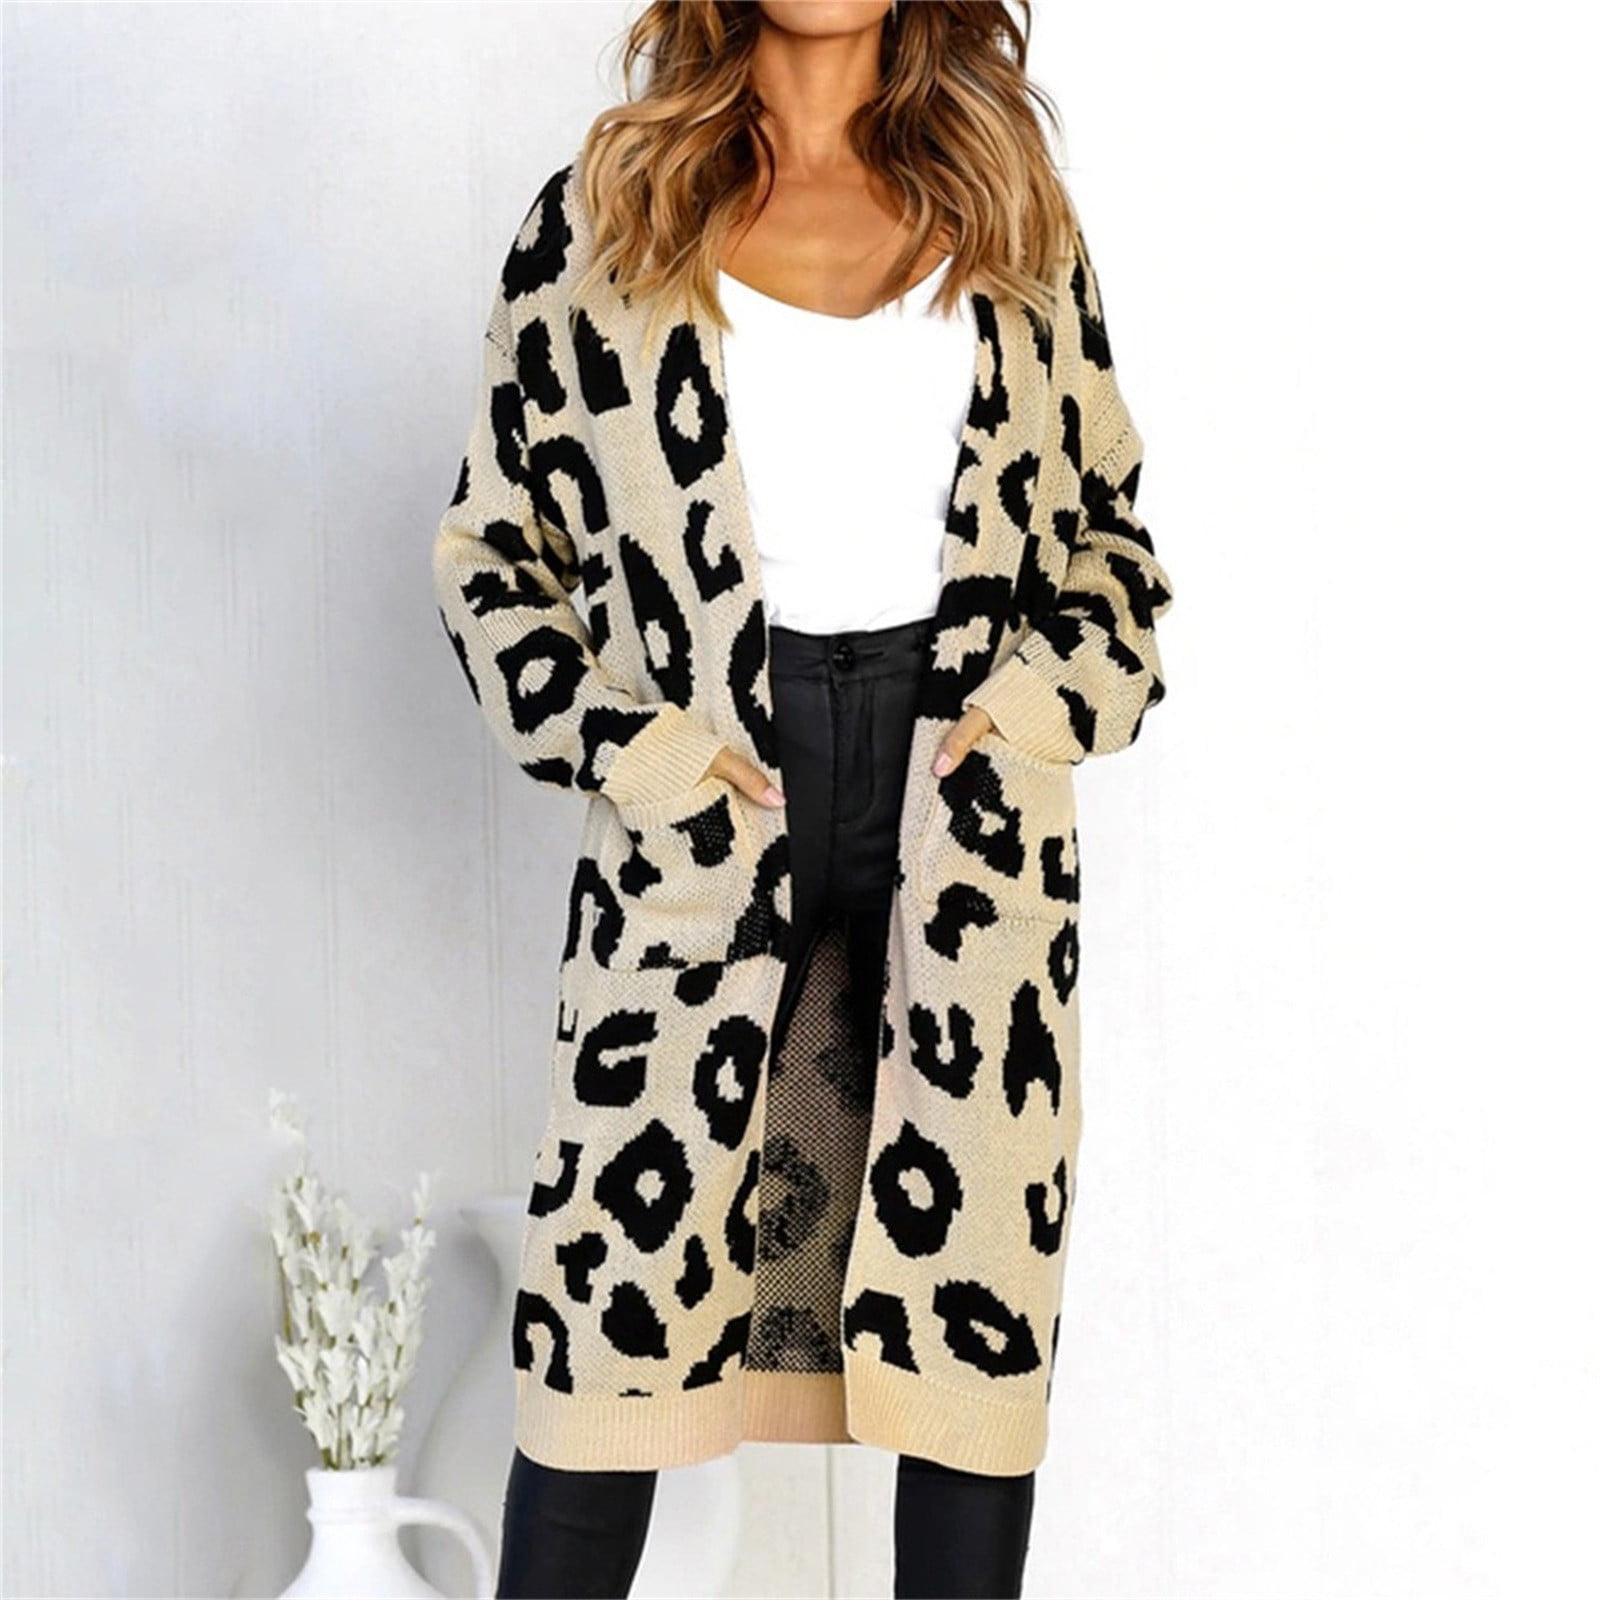 Tuscom Sweater Women, Fashion Women Winter Warm Long Leopard Print Cardigan Sweater with Pocket Coat Blouse Outwear - Walmart.com